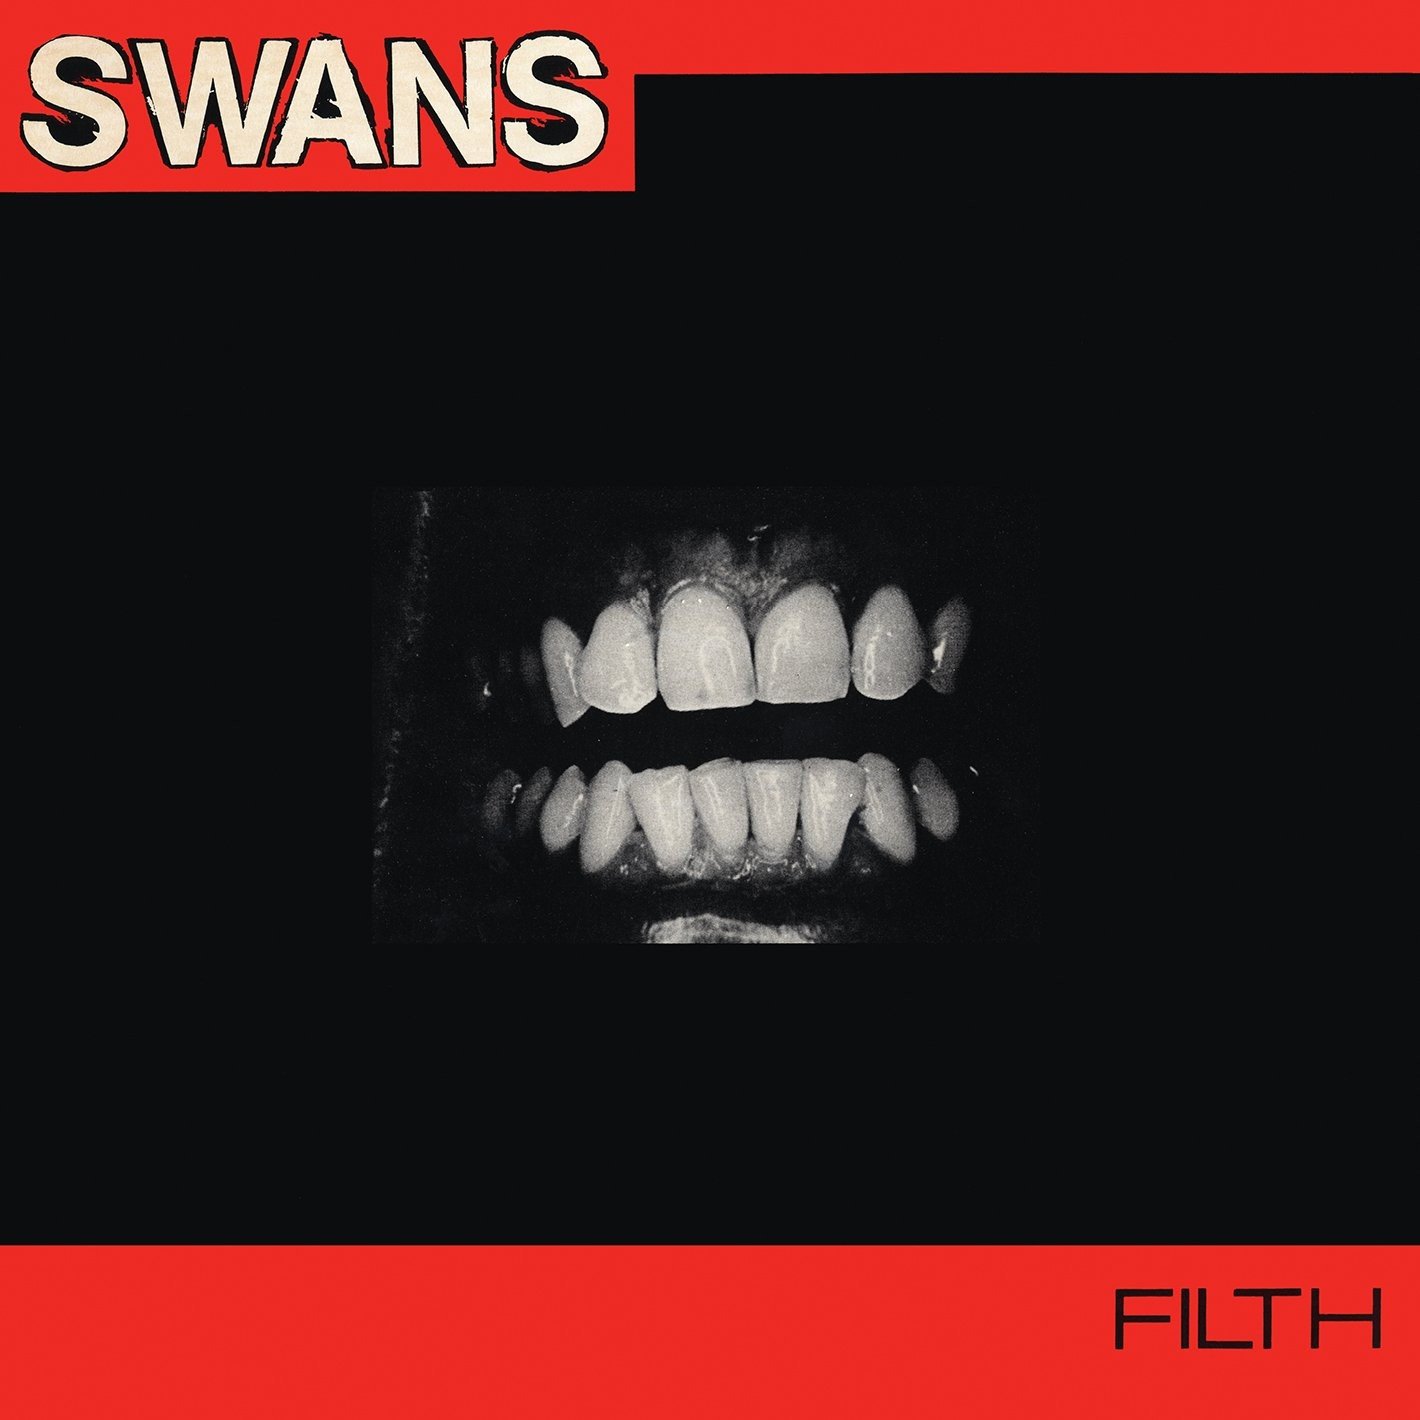 You are currently viewing Godišnjica objavljivanja albuma Filth noise-eksperimentalnog benda Swans